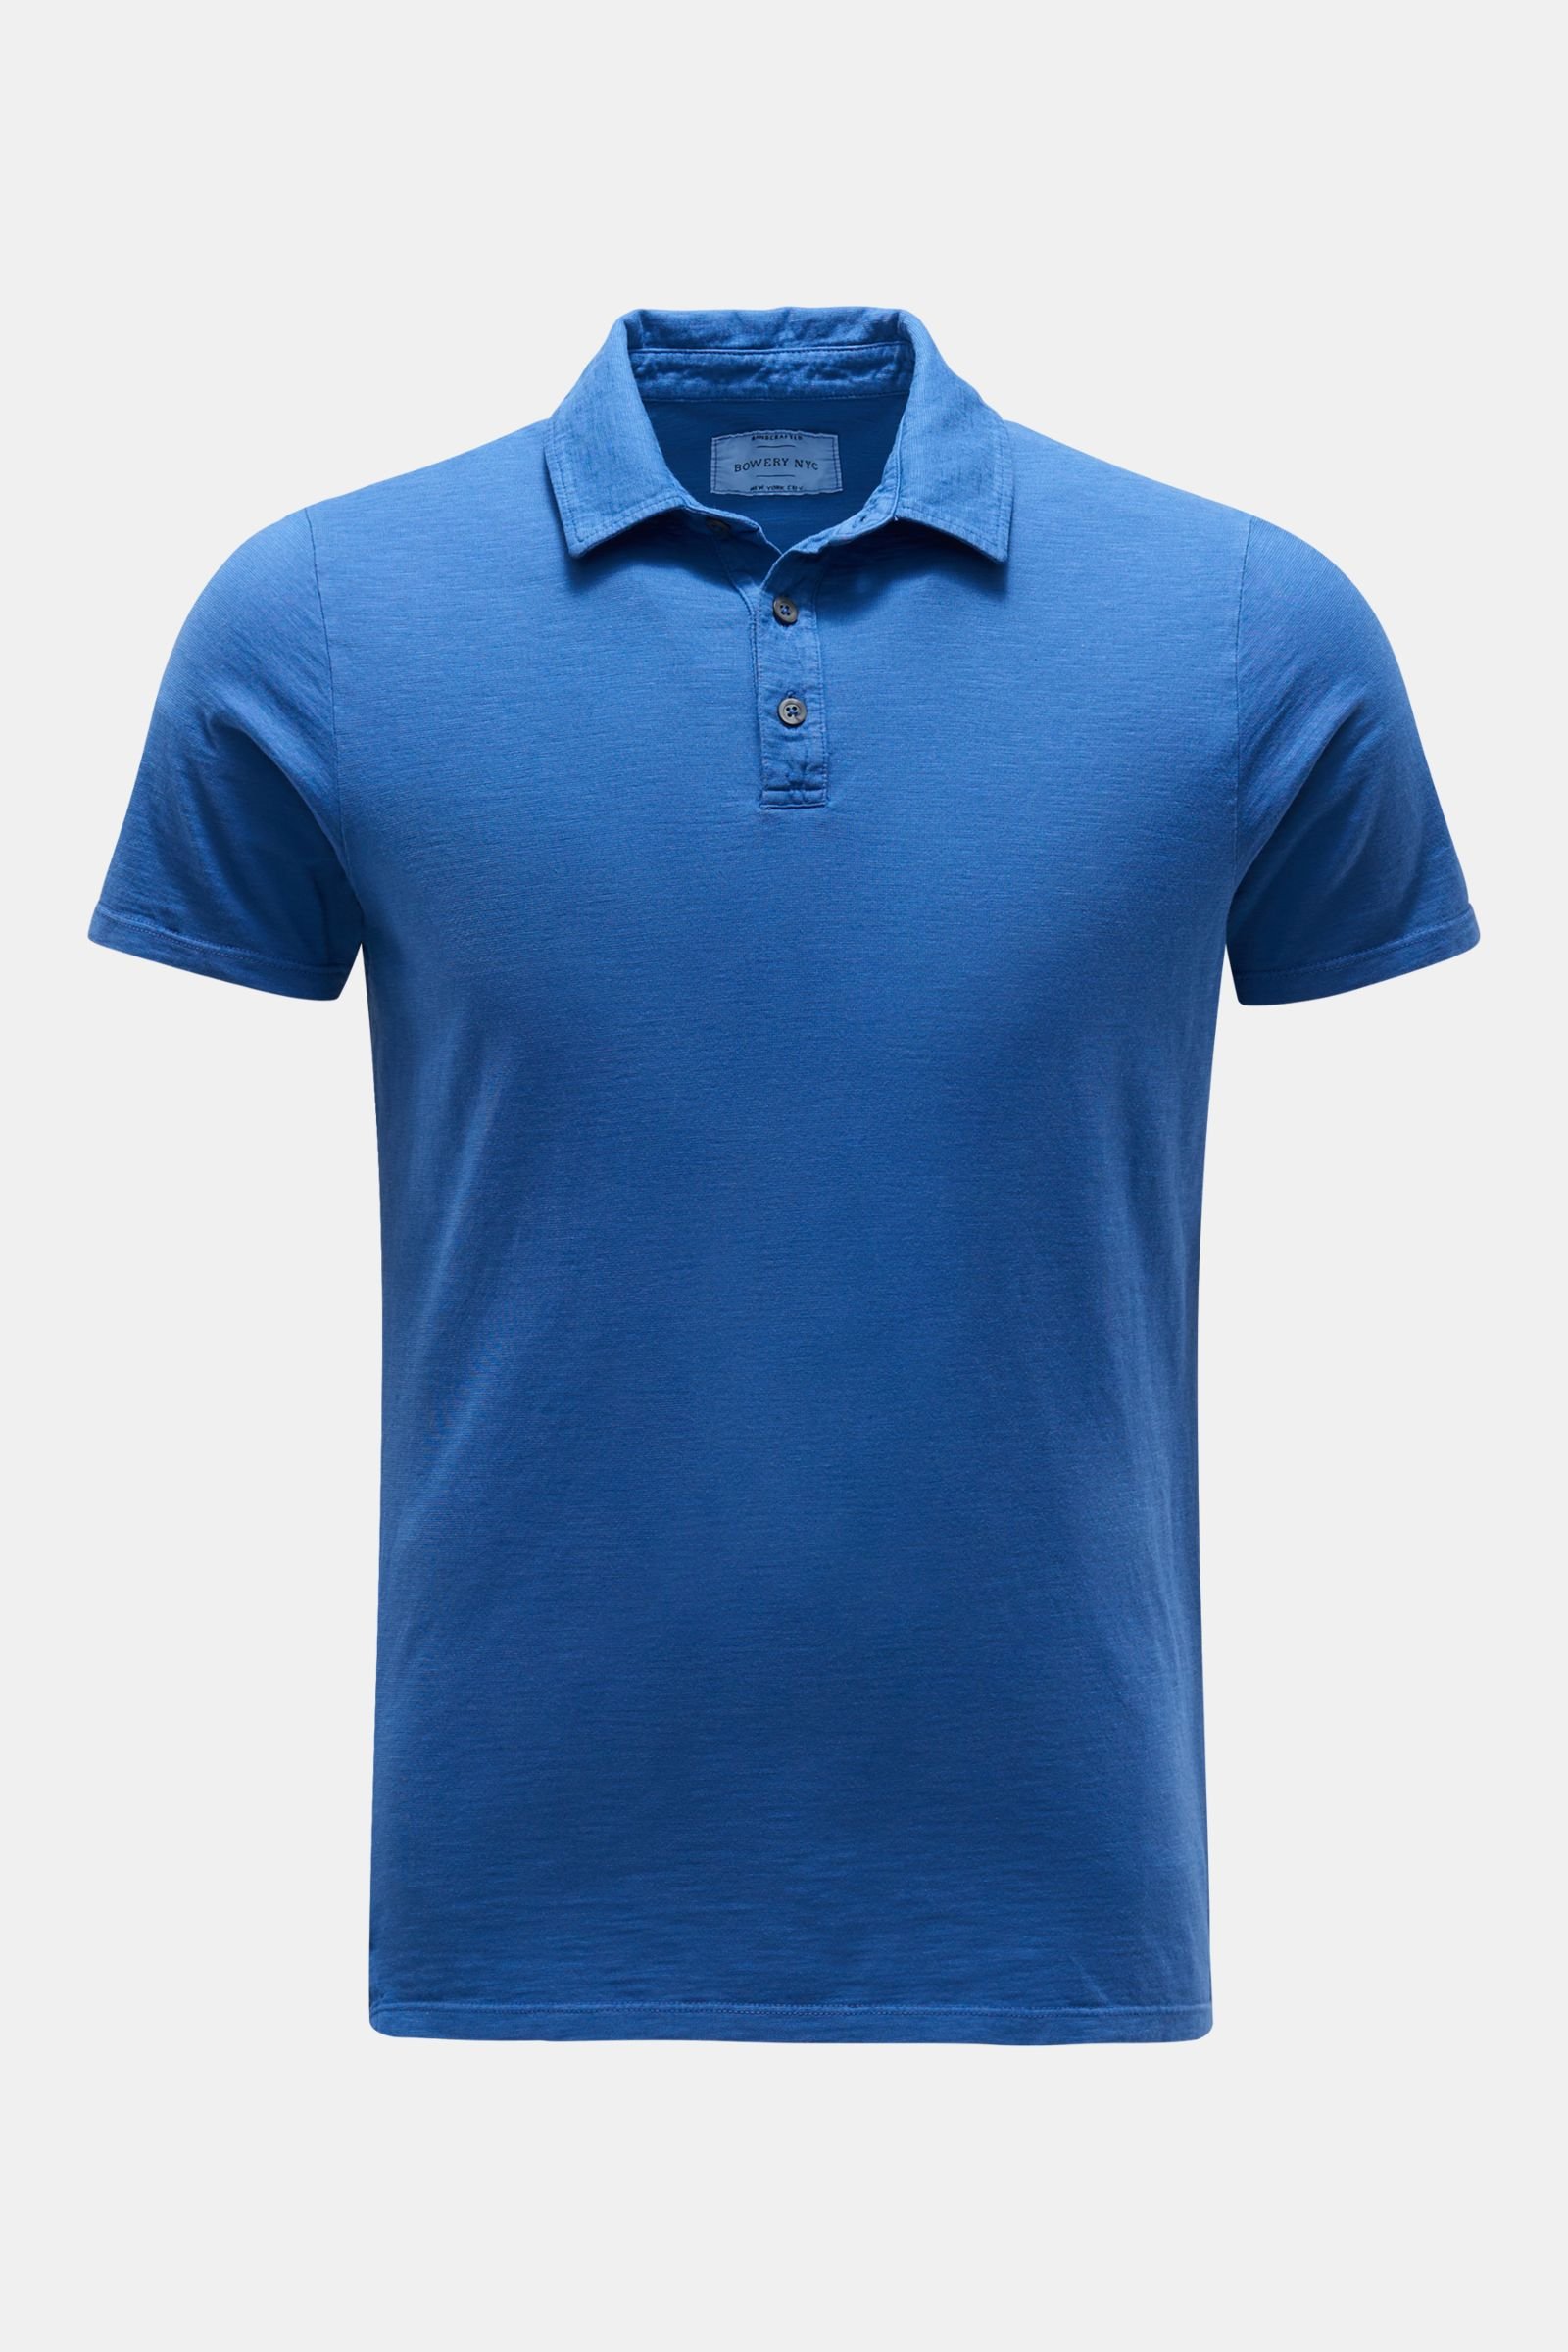 Jersey polo shirt blue